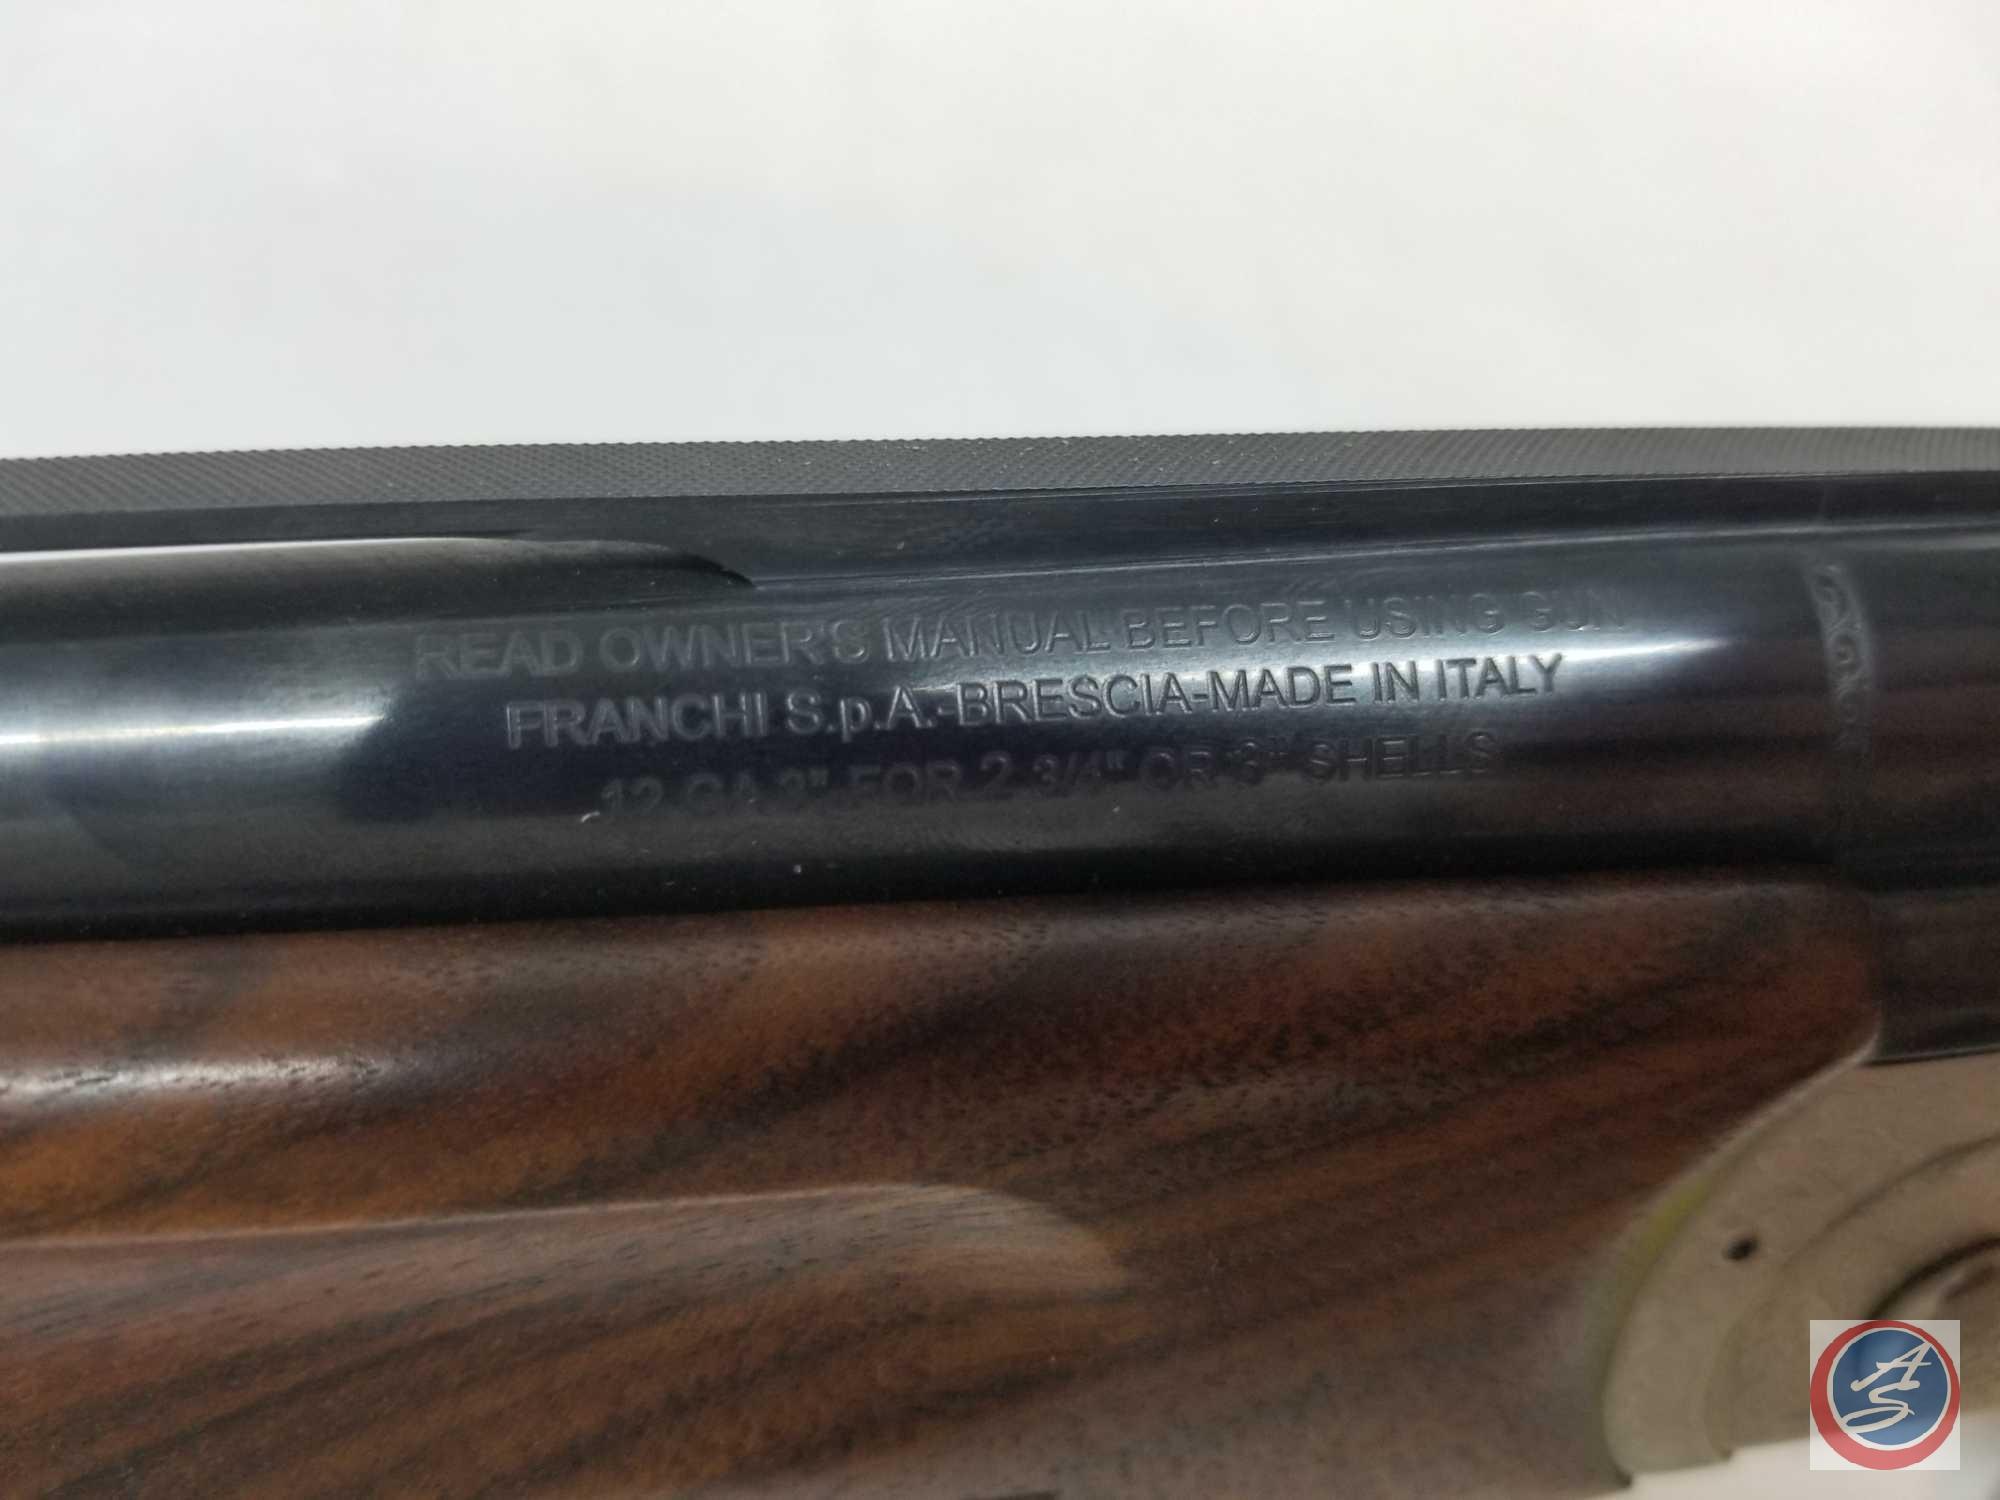 Franchi Model Renaissance Elite 12 GA 3" Shotgun Over Under Shotgun with gold inlay, vent rib 26